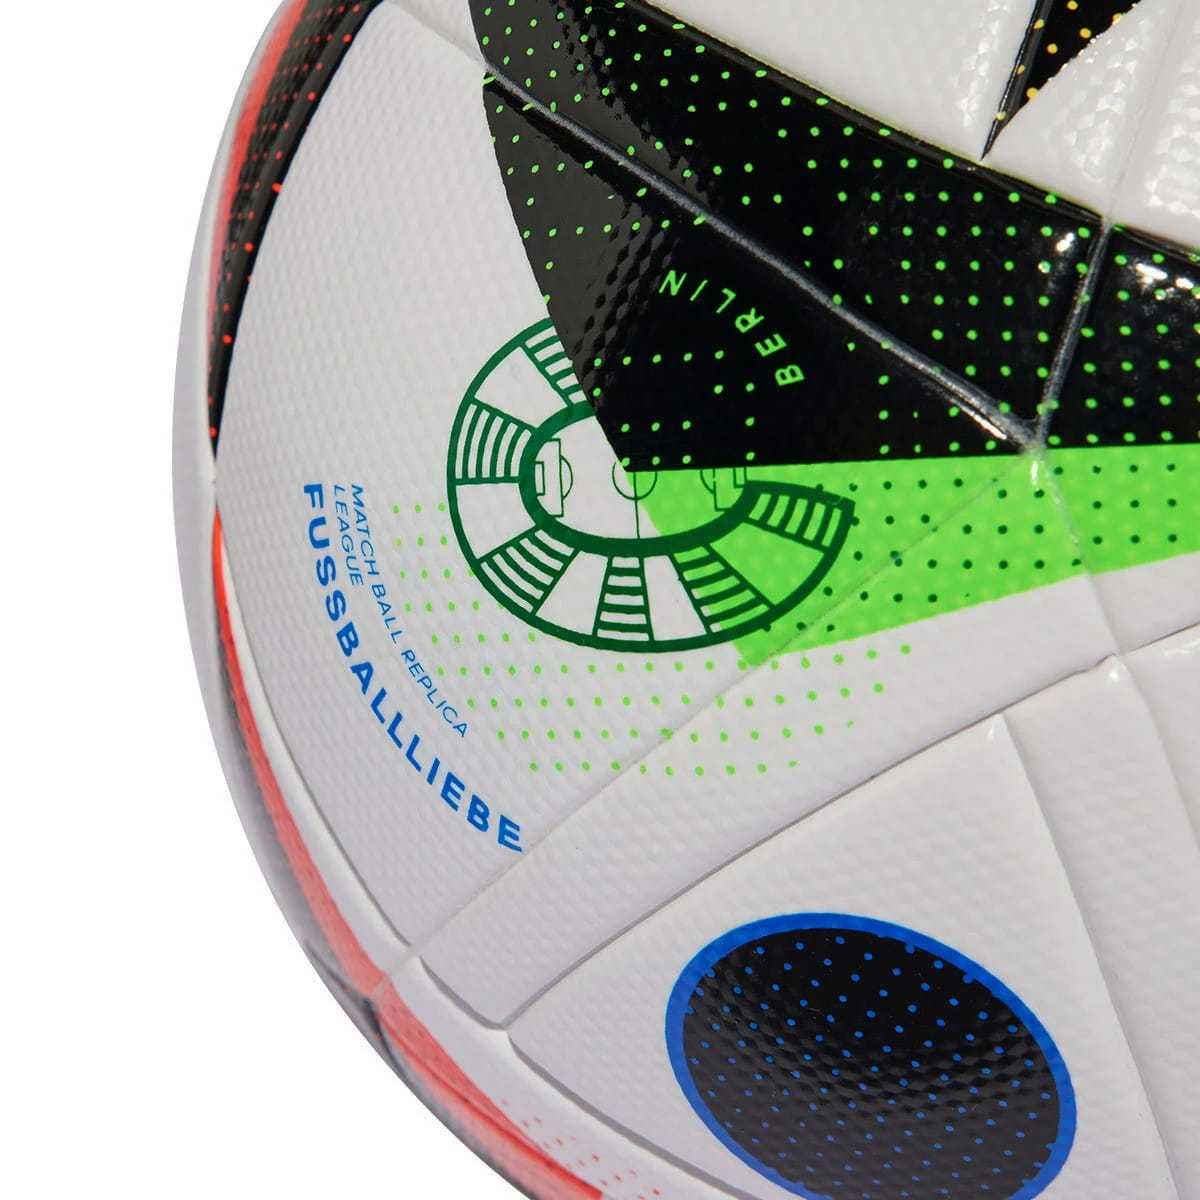 Мяч футбольный Adidas Fussballliebe EURO24 League BOX IN9369 (р. 4-5)